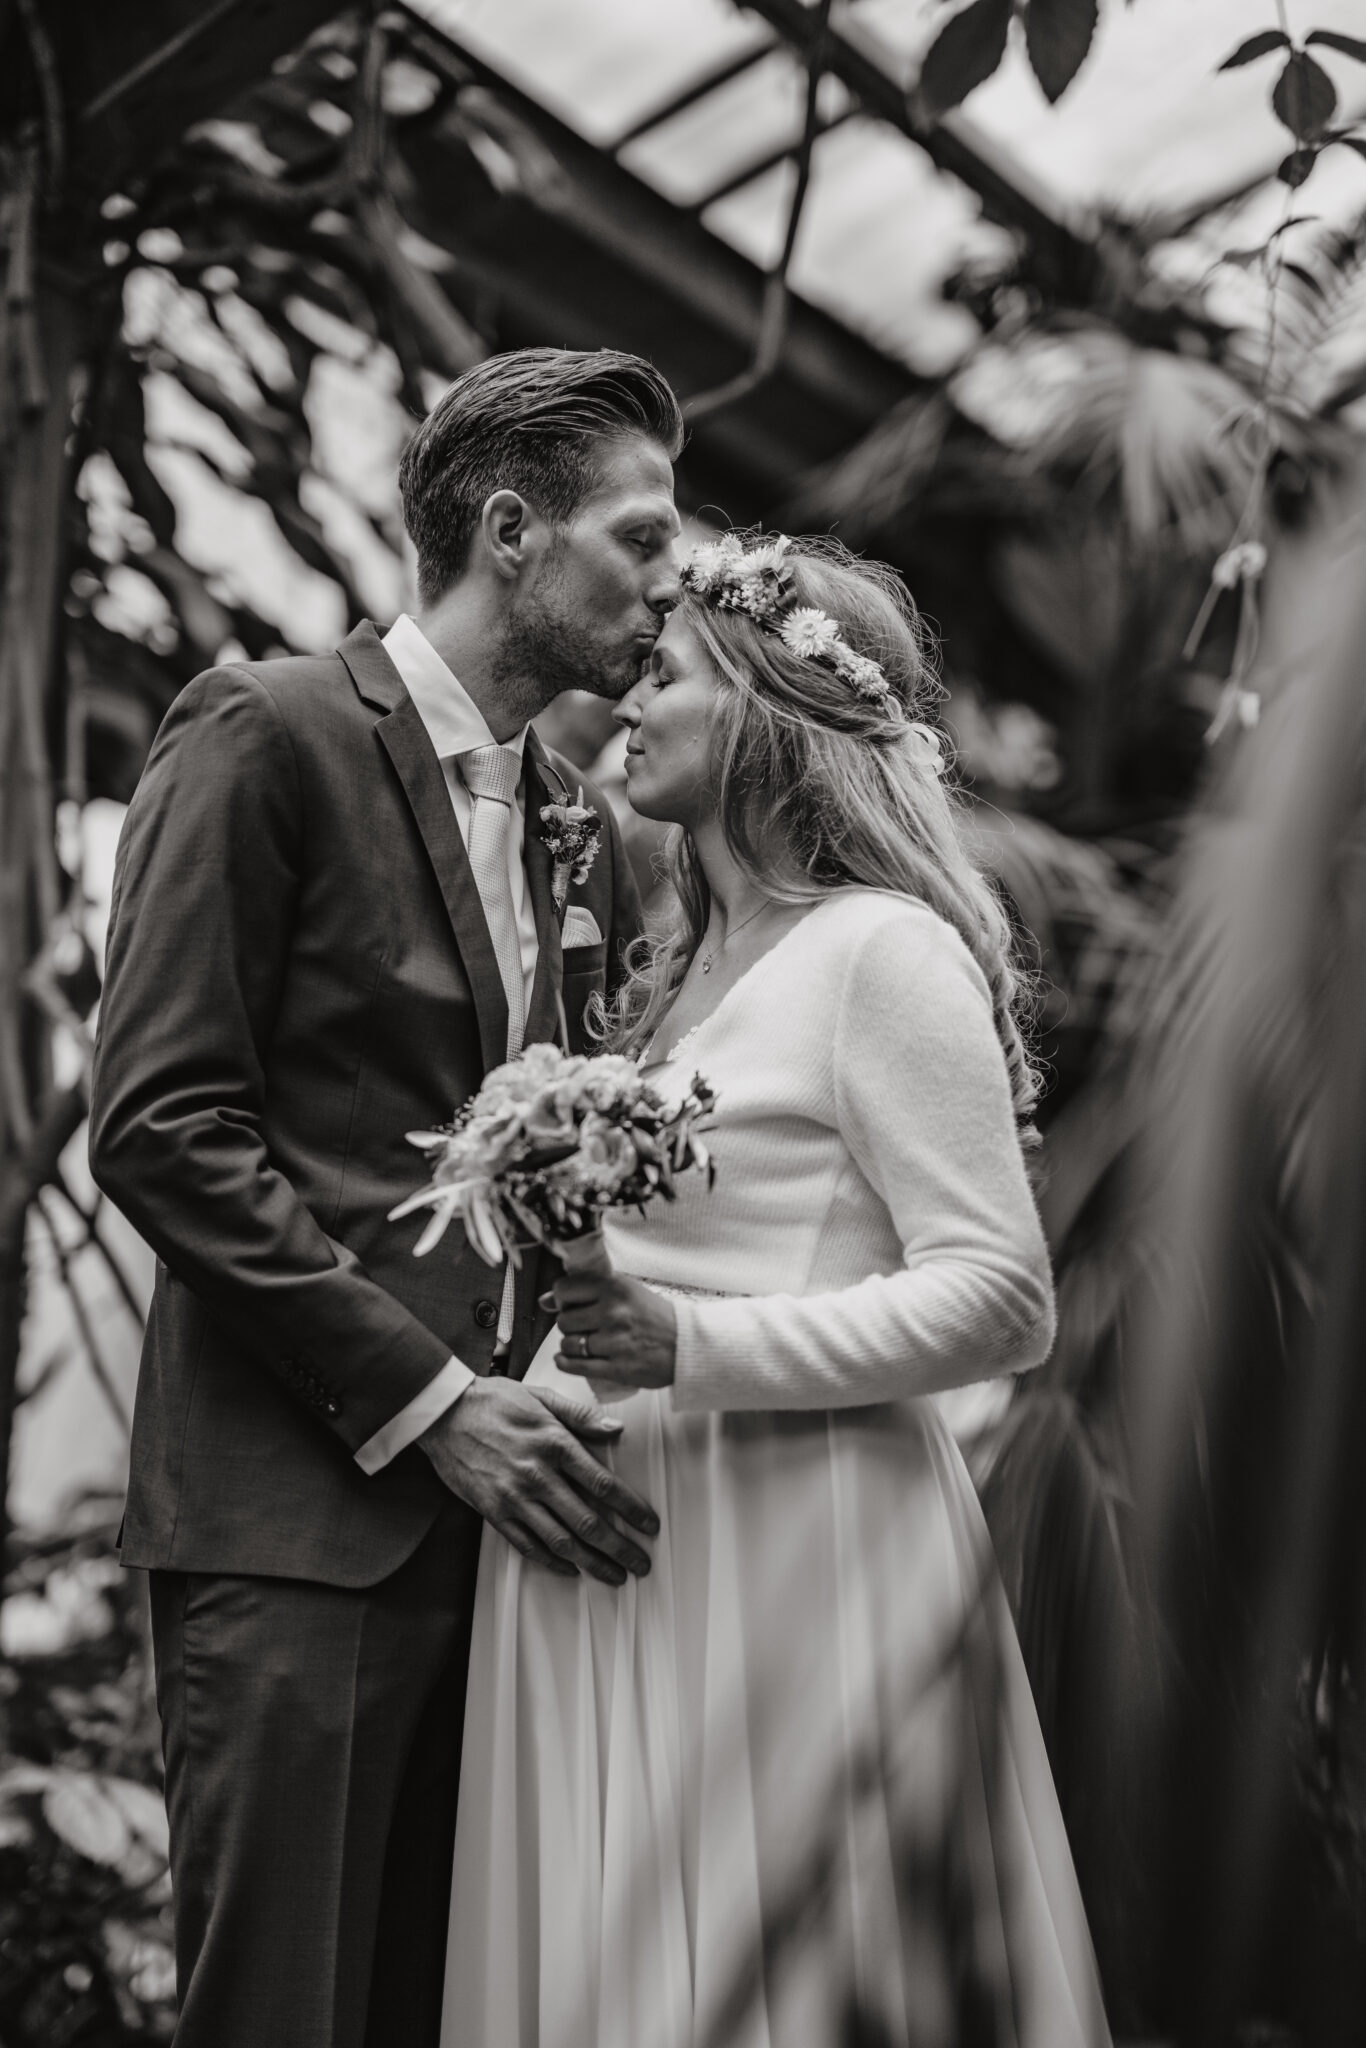 Bräutigam gibt Braut Kuss auf Stirn, Paarfoto, Affenhaus, Kölner Zoo